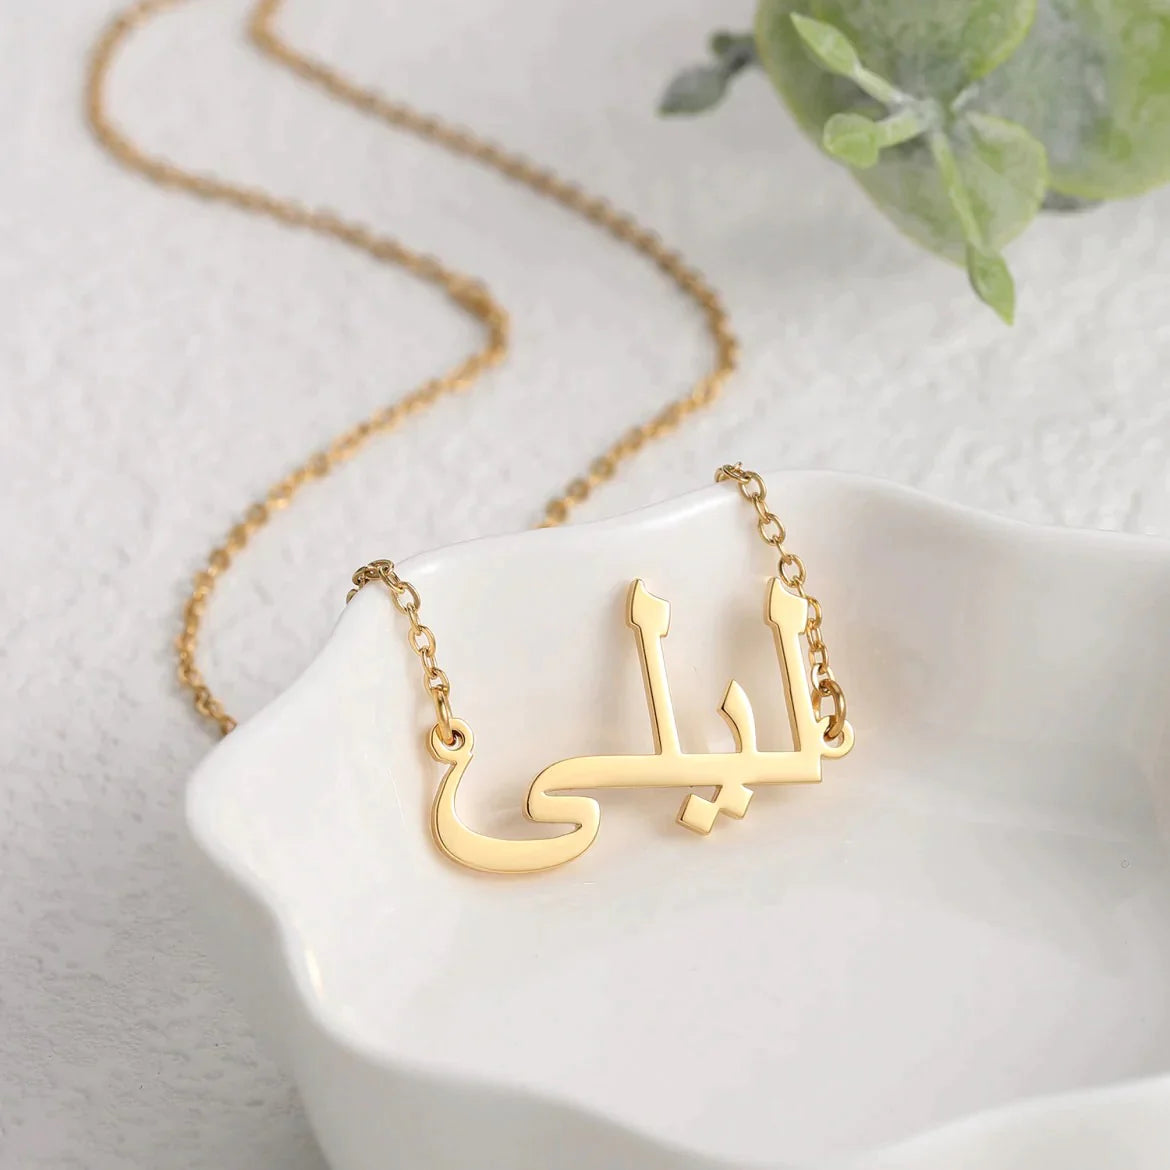 Gold Plated Simple Arabic Name Necklace at Rs 799.00 | गोल्ड प्लेटेड  पेंडेंट - Blueswift, Malda | ID: 25186414555